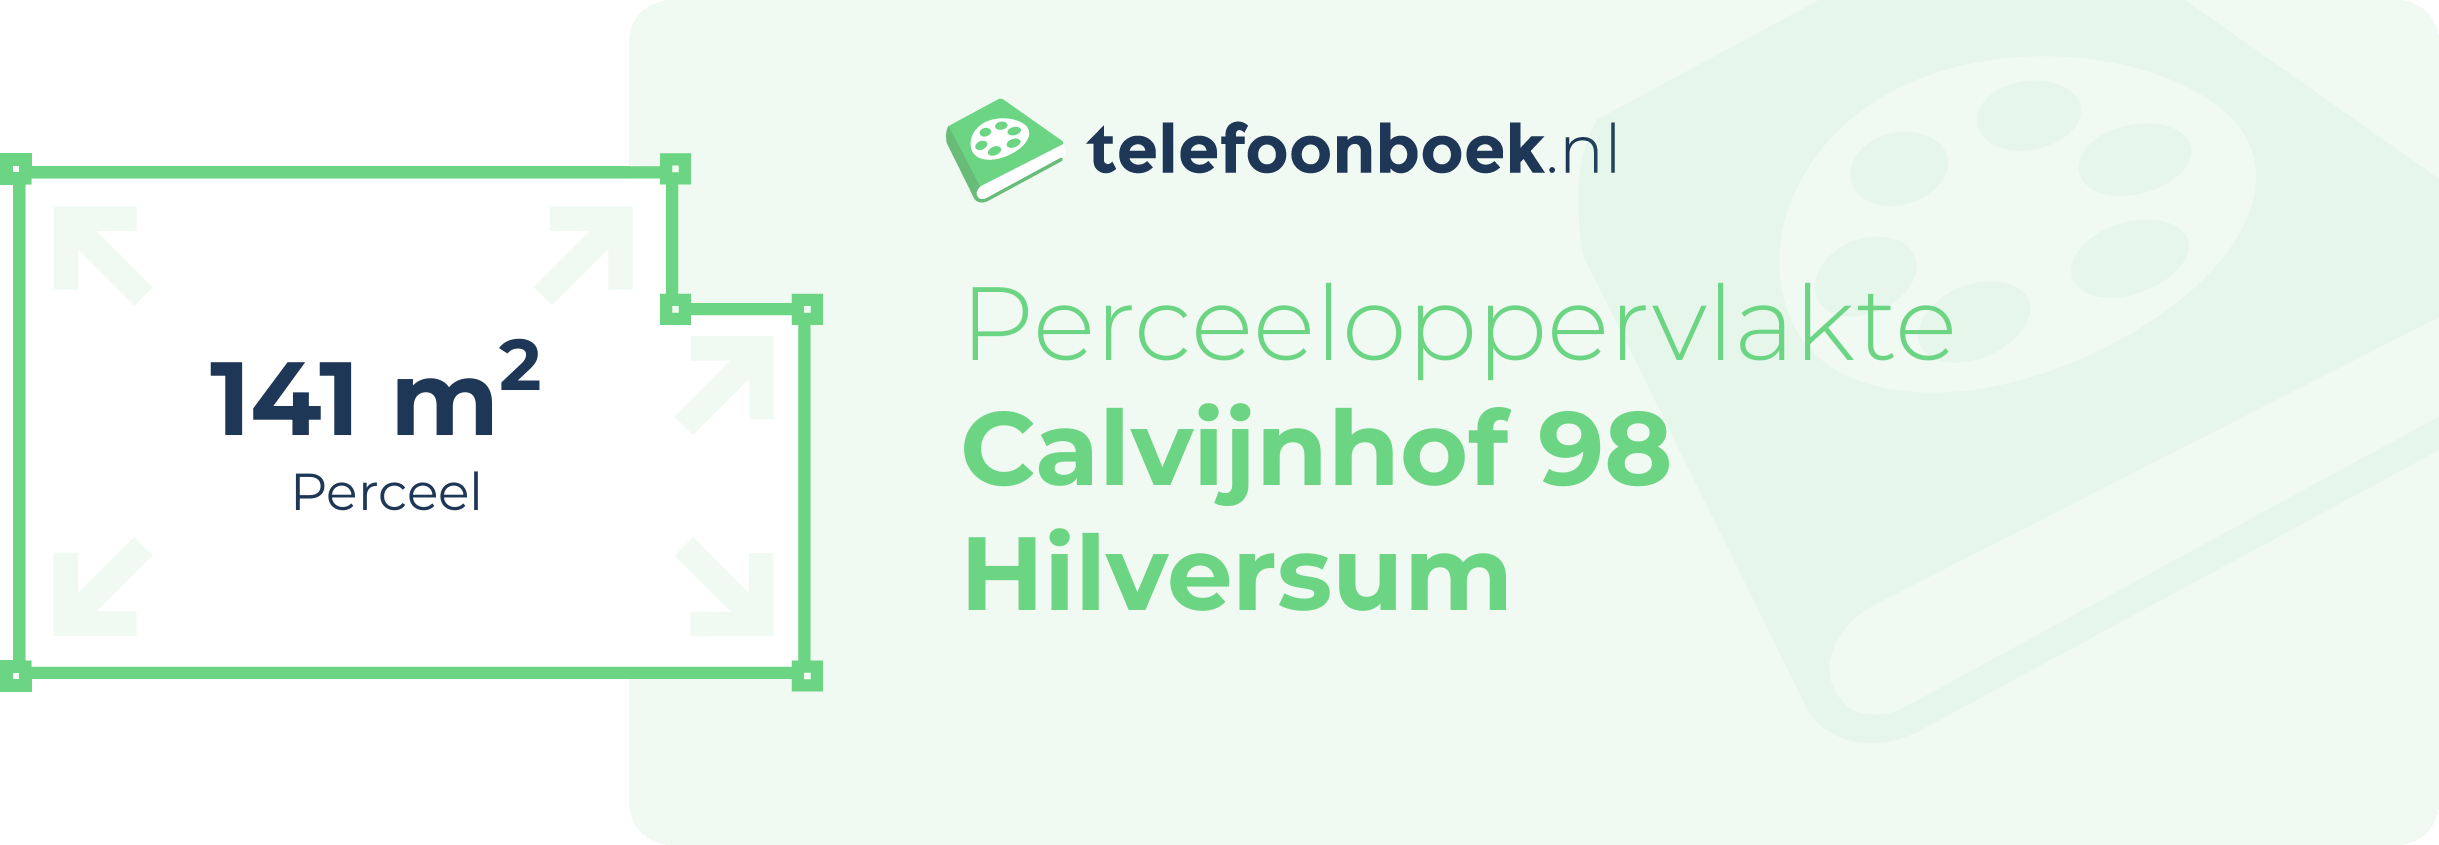 Perceeloppervlakte Calvijnhof 98 Hilversum